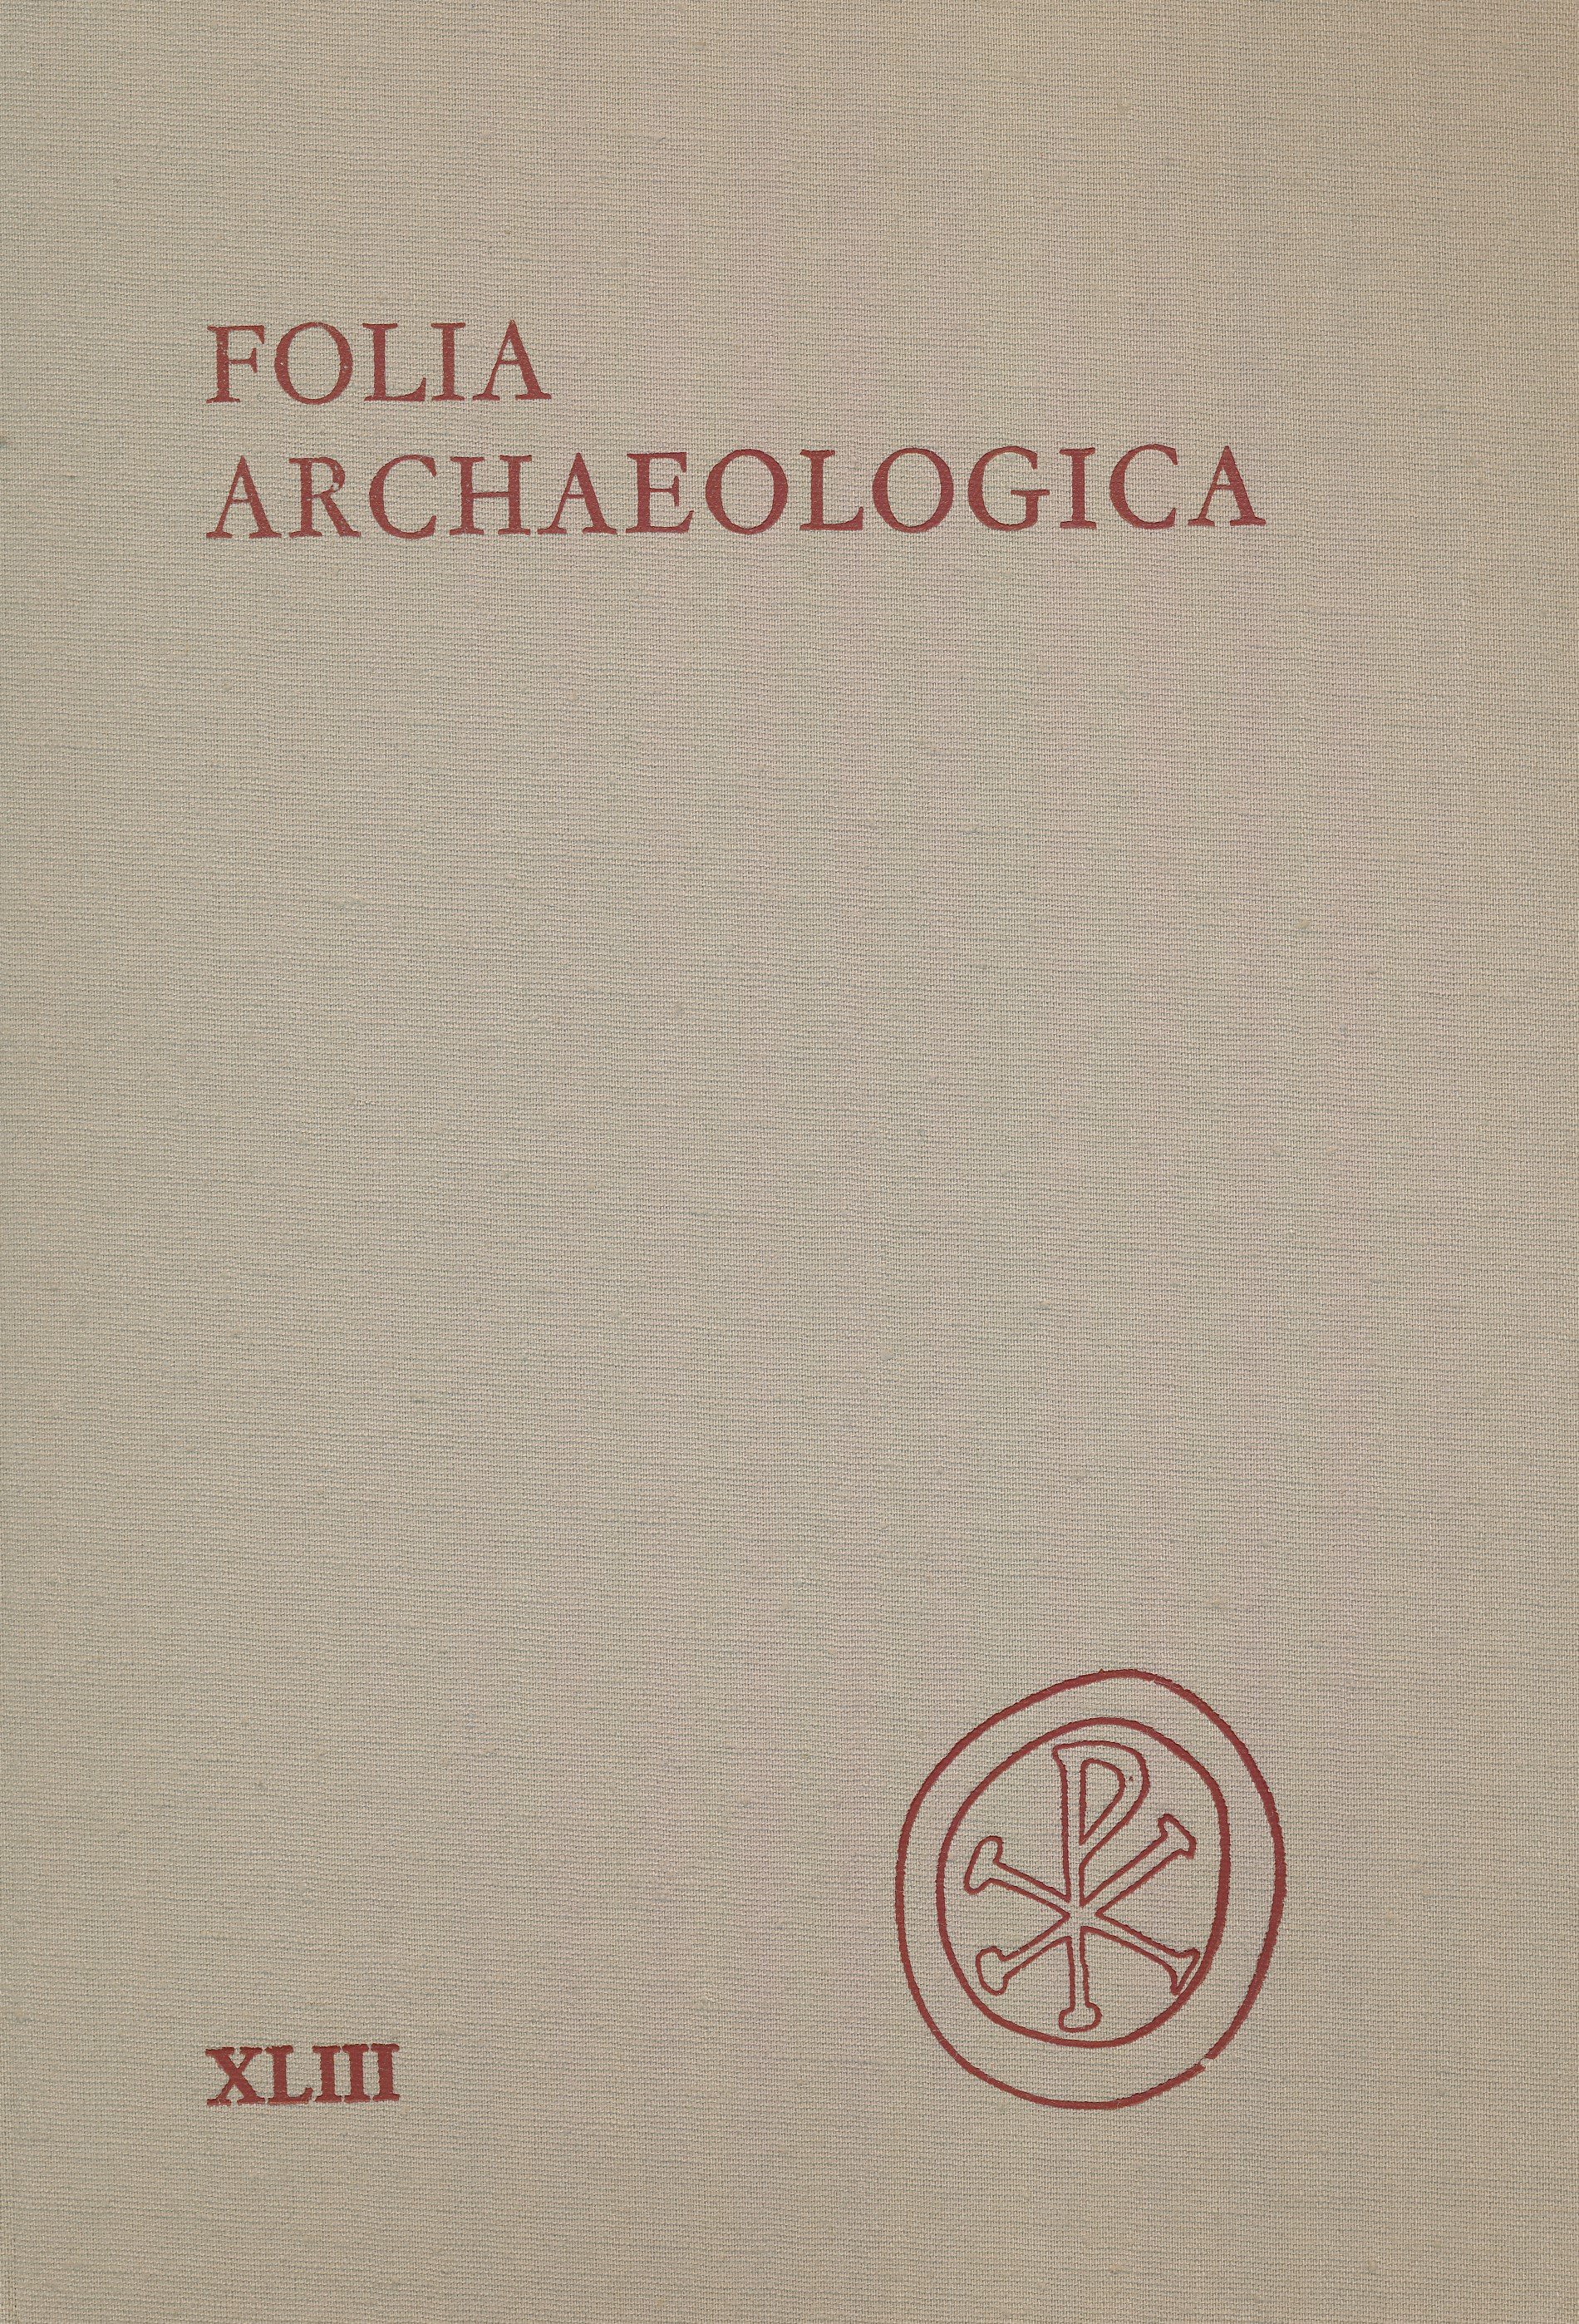 Folia archaeologica XLIII (Erkel Ferenc Területi Múzeum, Gyula CC BY-NC-SA)